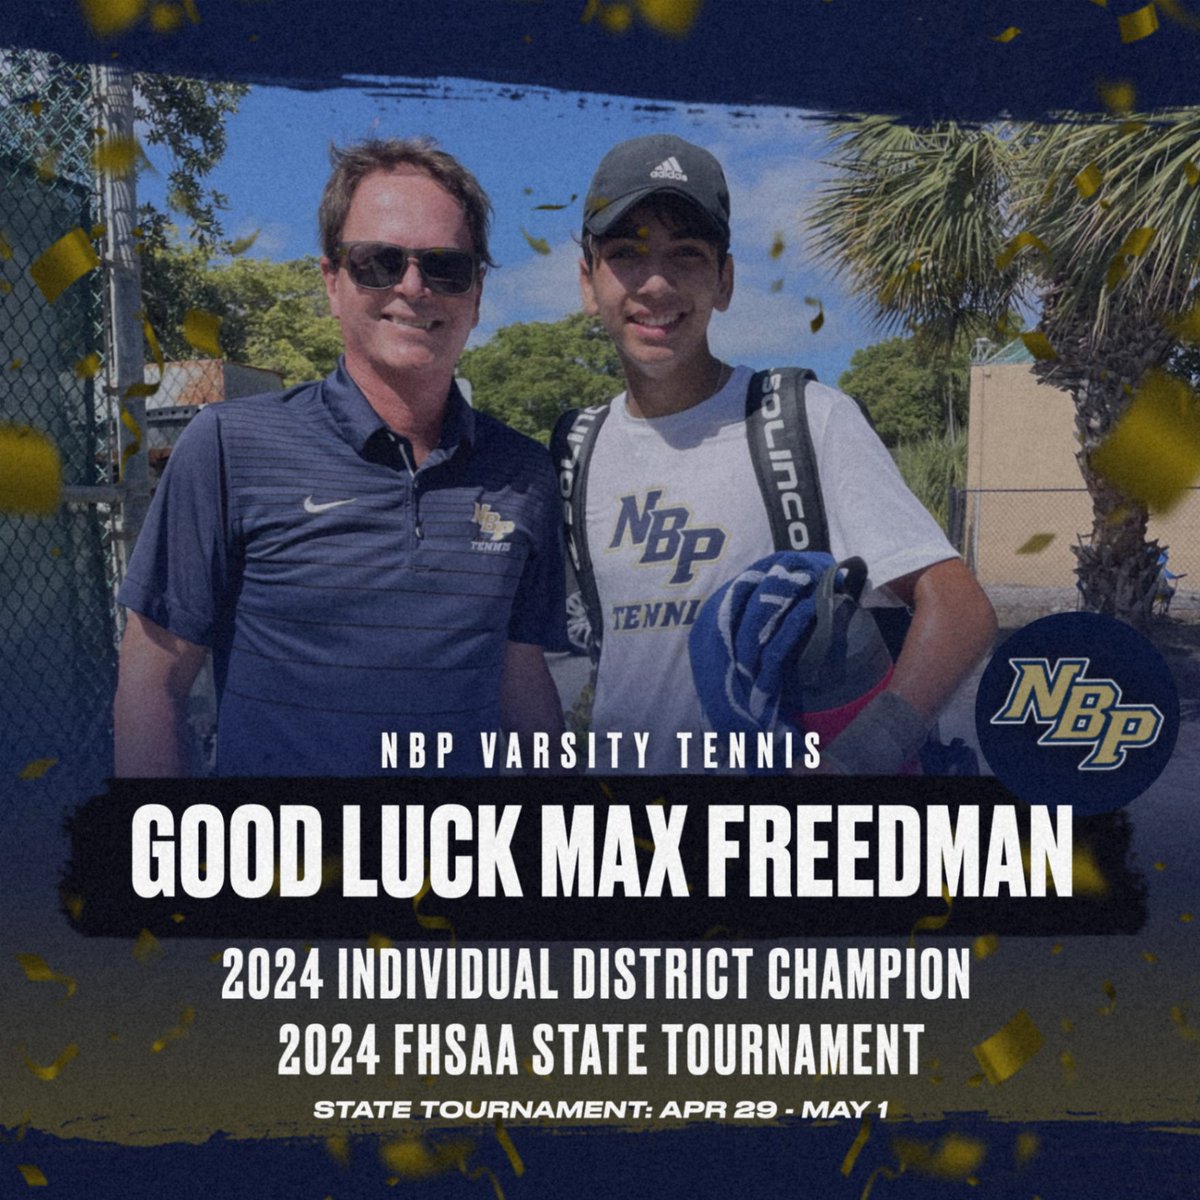 Congrats Max Freedman!
2024 Individual District Champion🔥
#RepthePrep